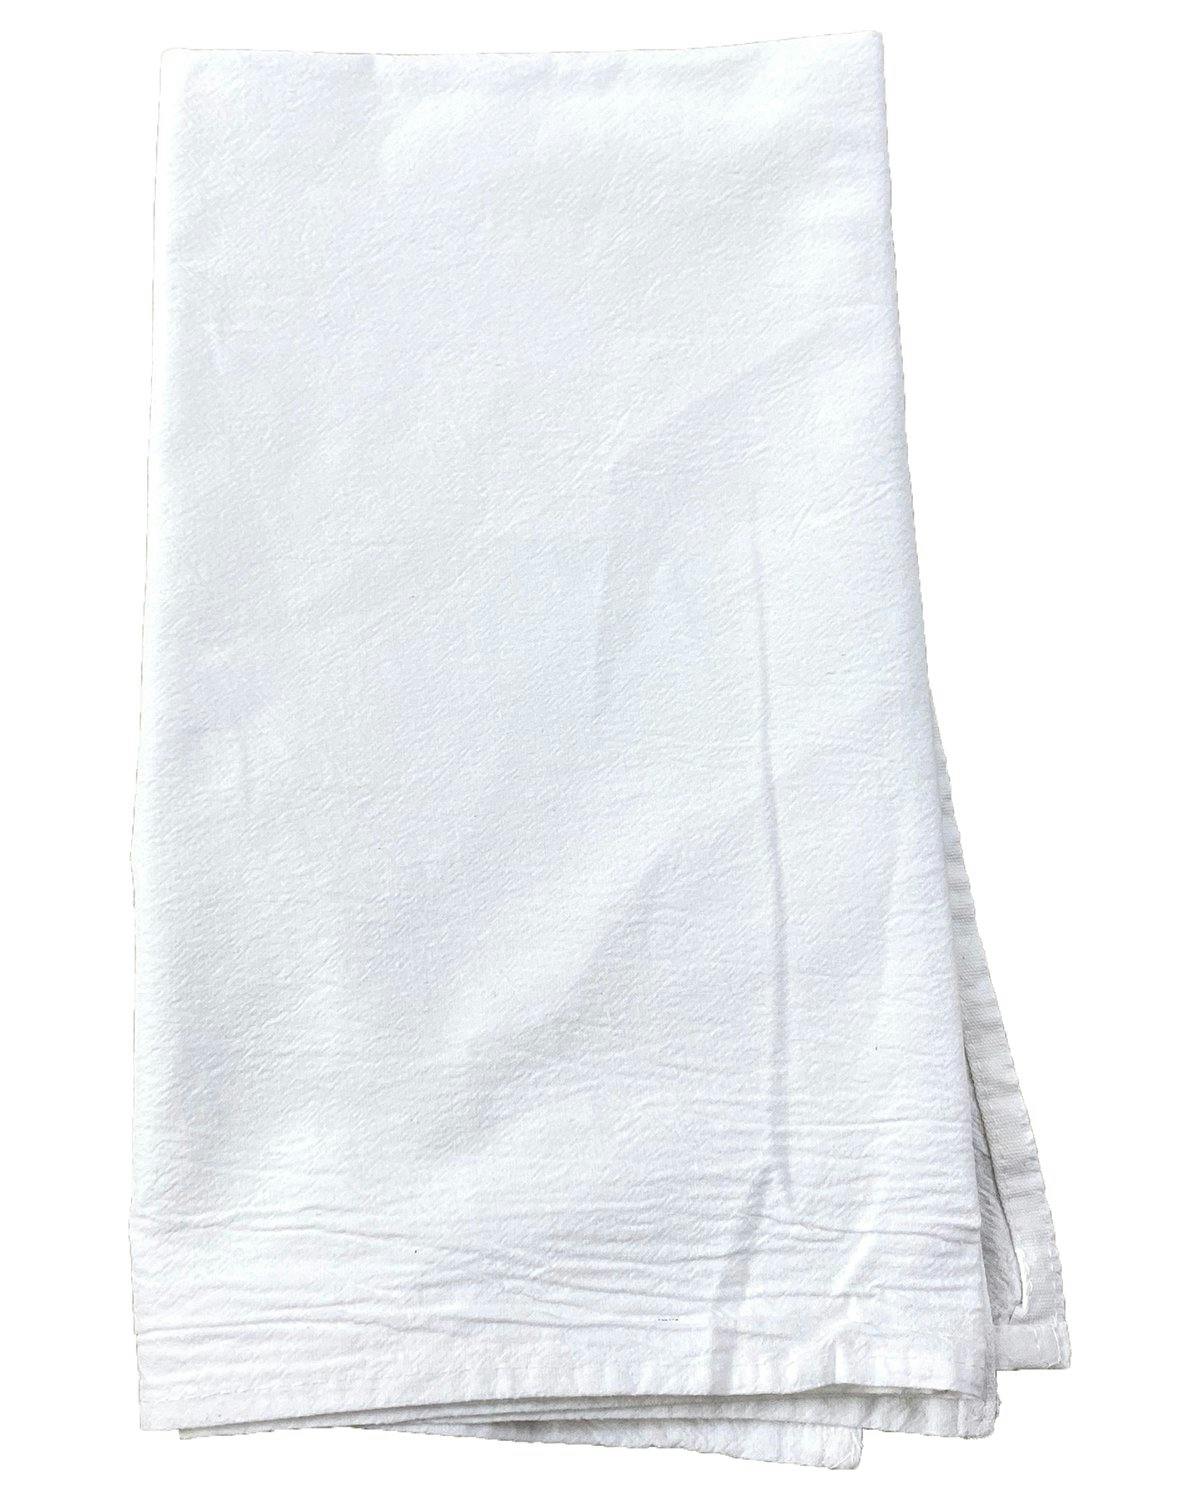 Image for American Flour Sack Towel 28x29